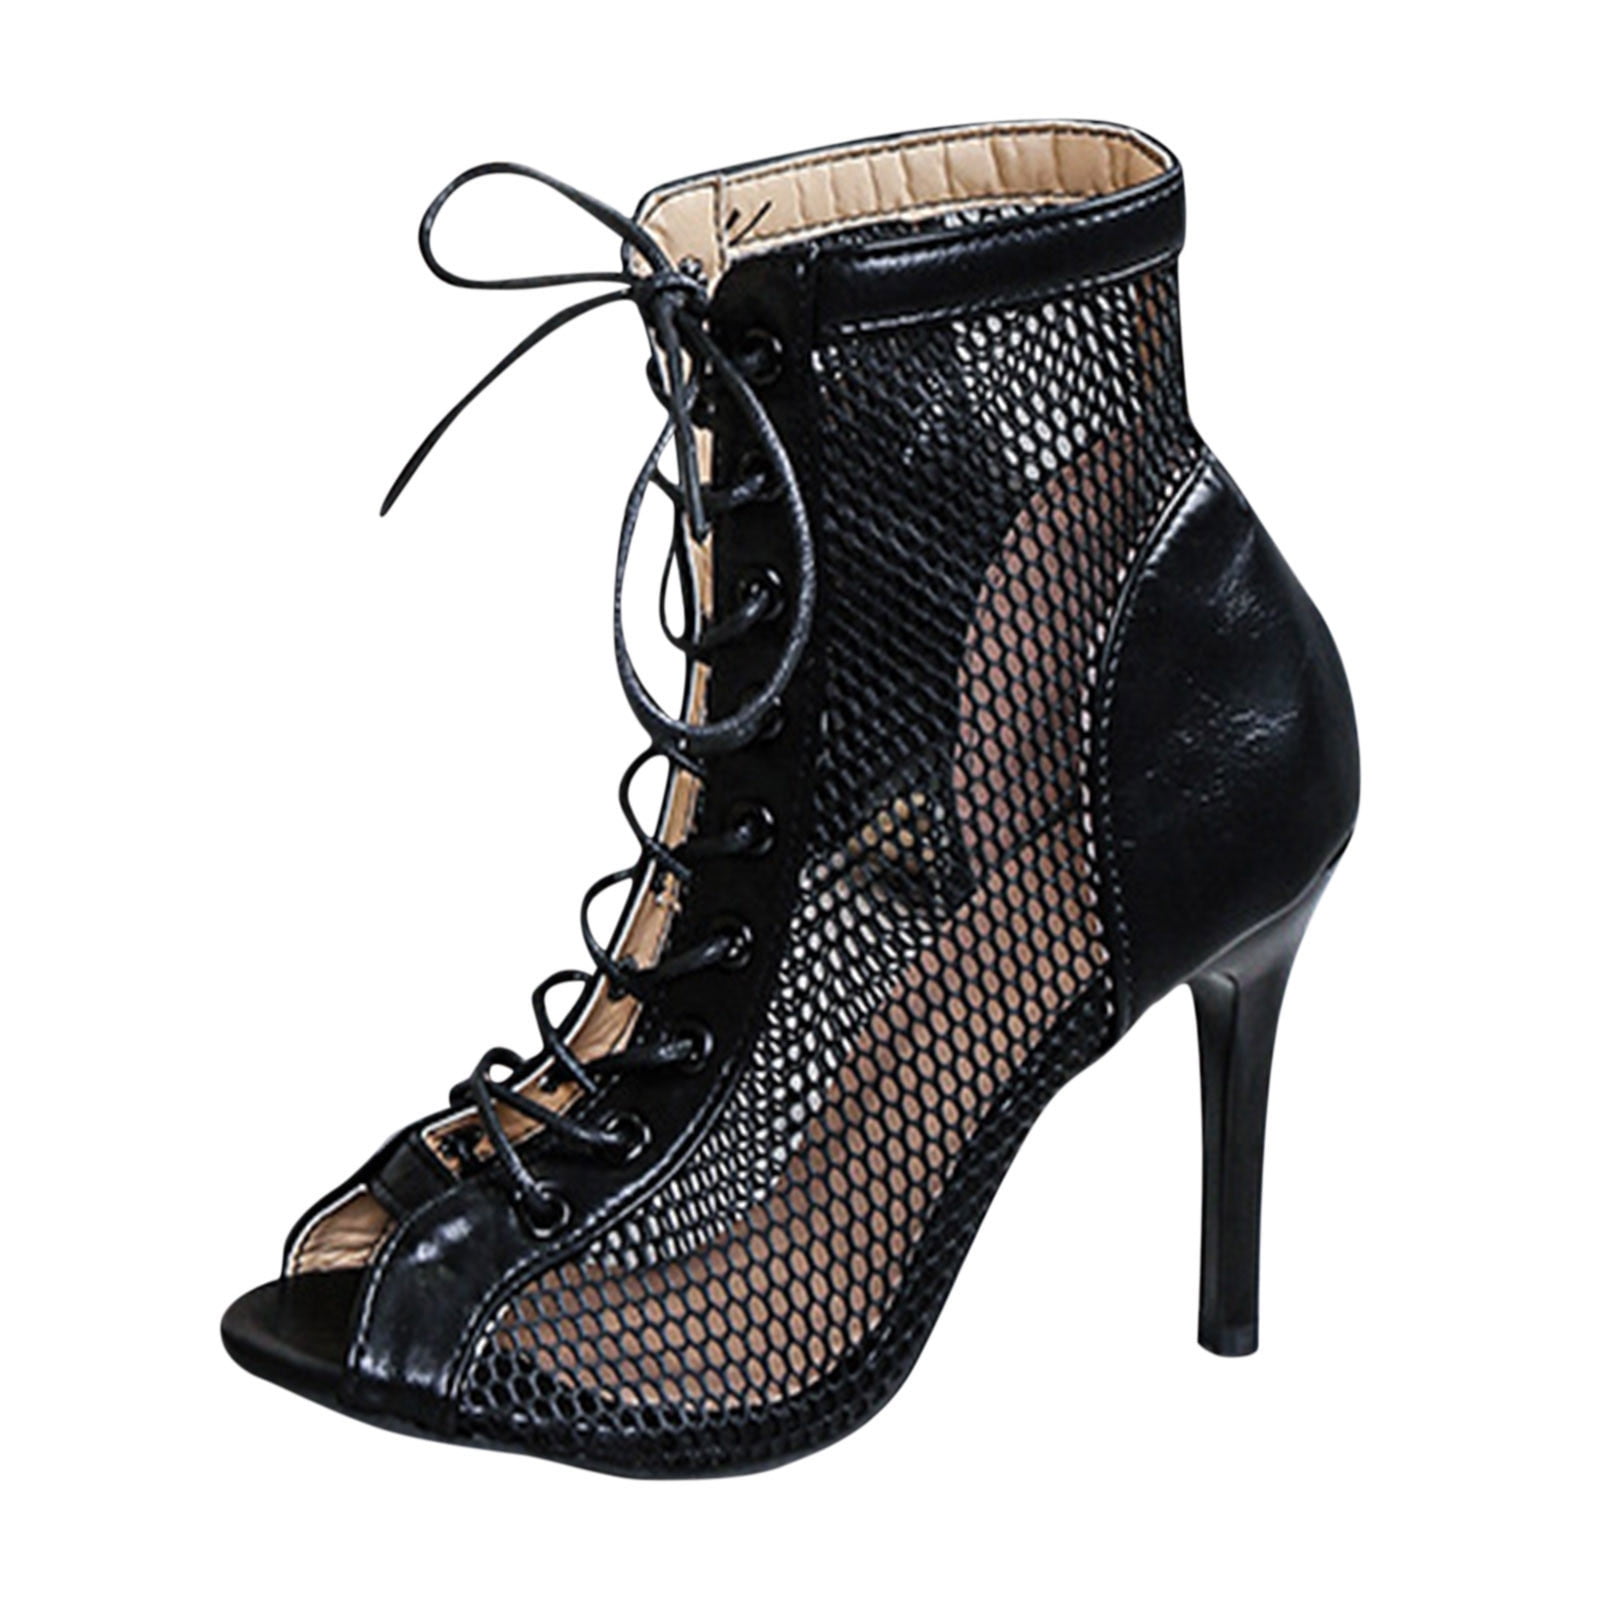 Saint Laurent's Genius Heel-Less Shoe, According to Physics Professors |  Vogue